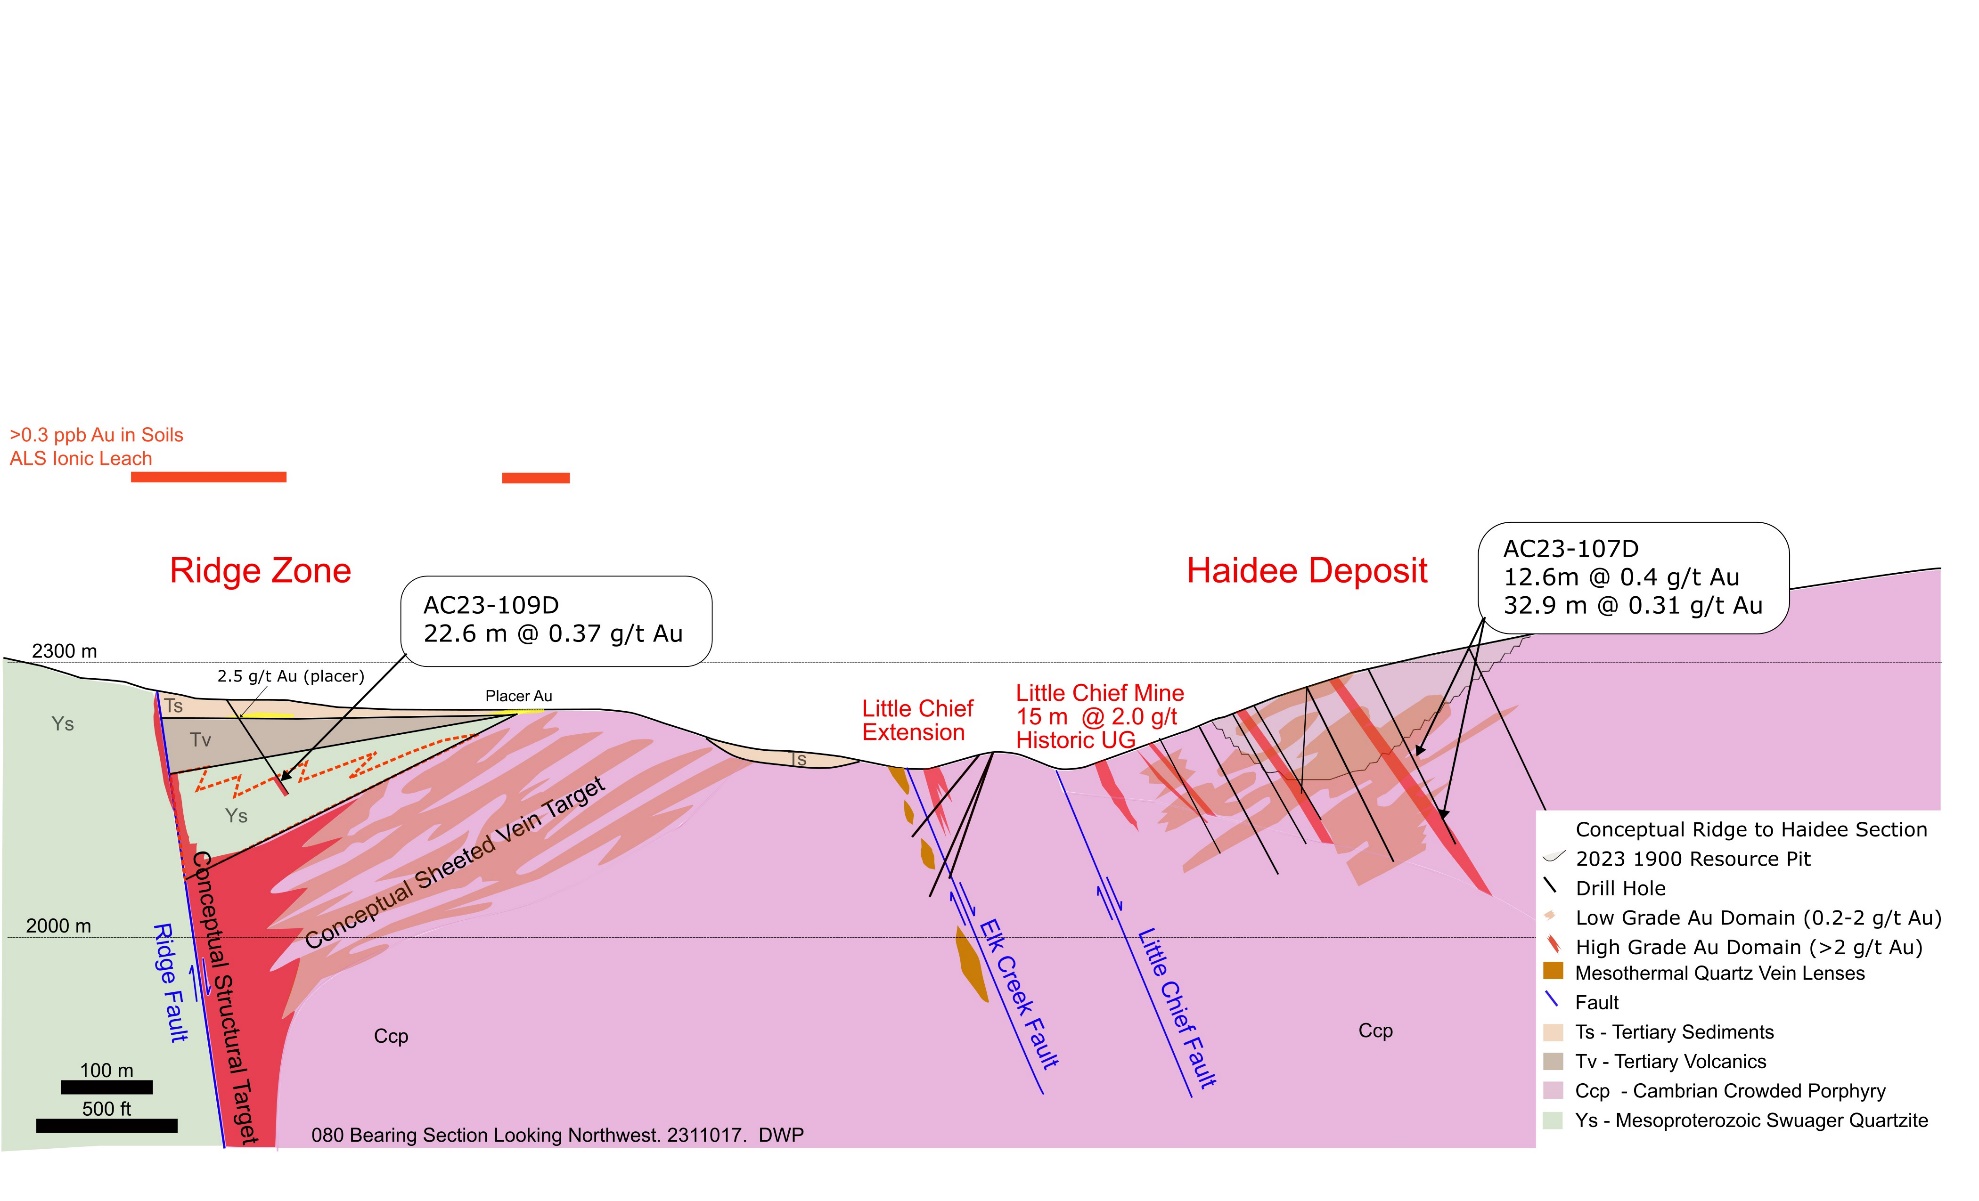 Ridge Zone to Haidee Deposit – Conceptual Section